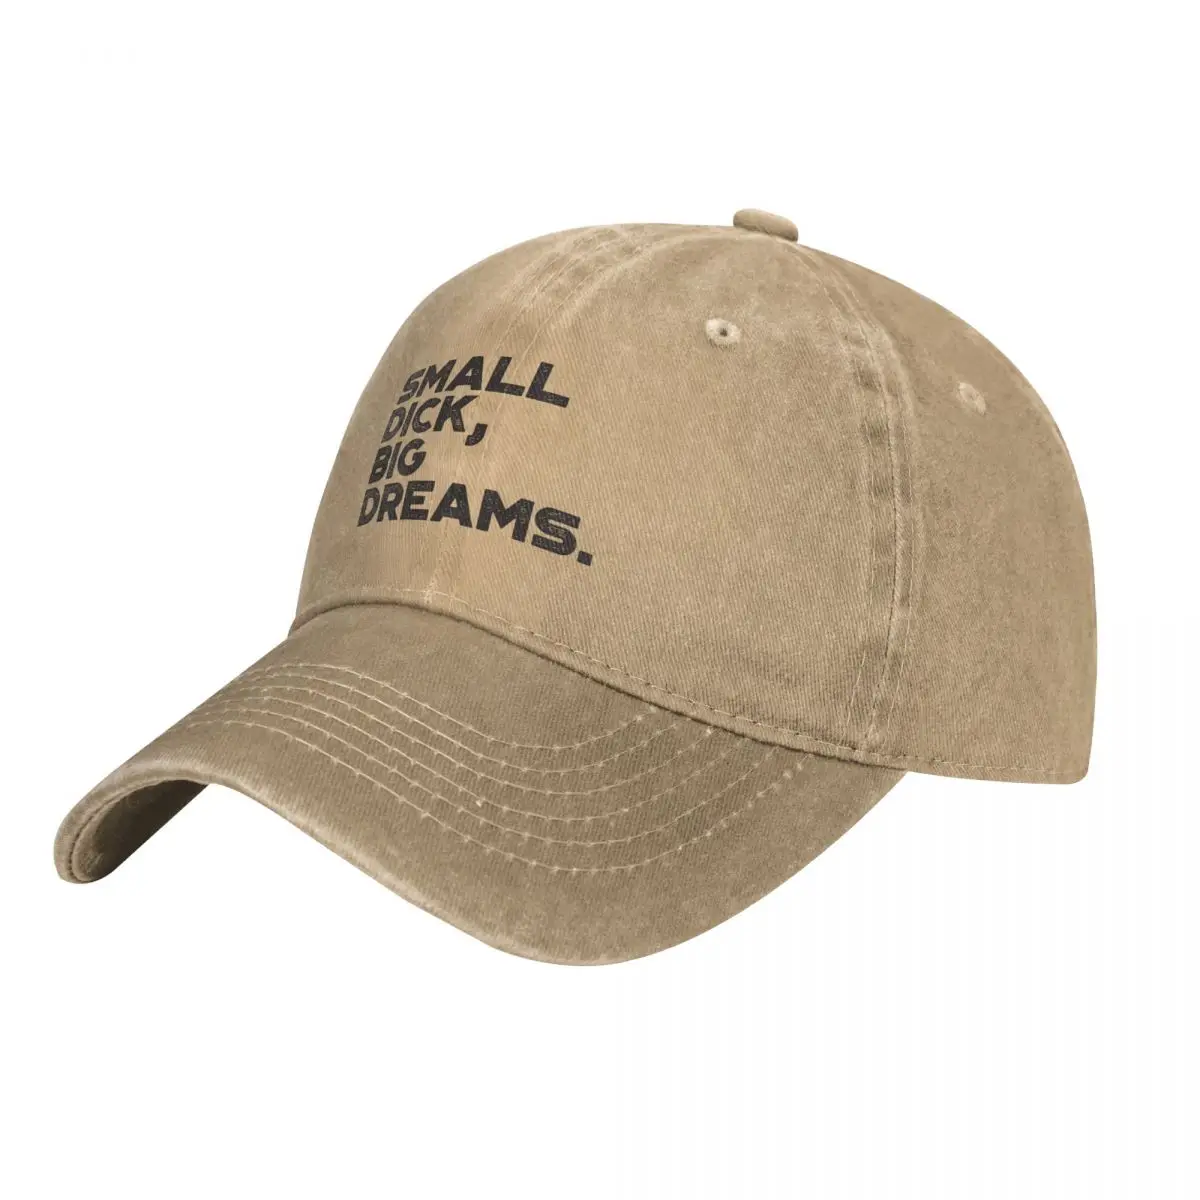 

Funny Offensive Small Dick Big Dreams Vintage Retro (Black) Cowboy Hat Golf fashionable hiking hat Designer Hat Caps Women Men'S